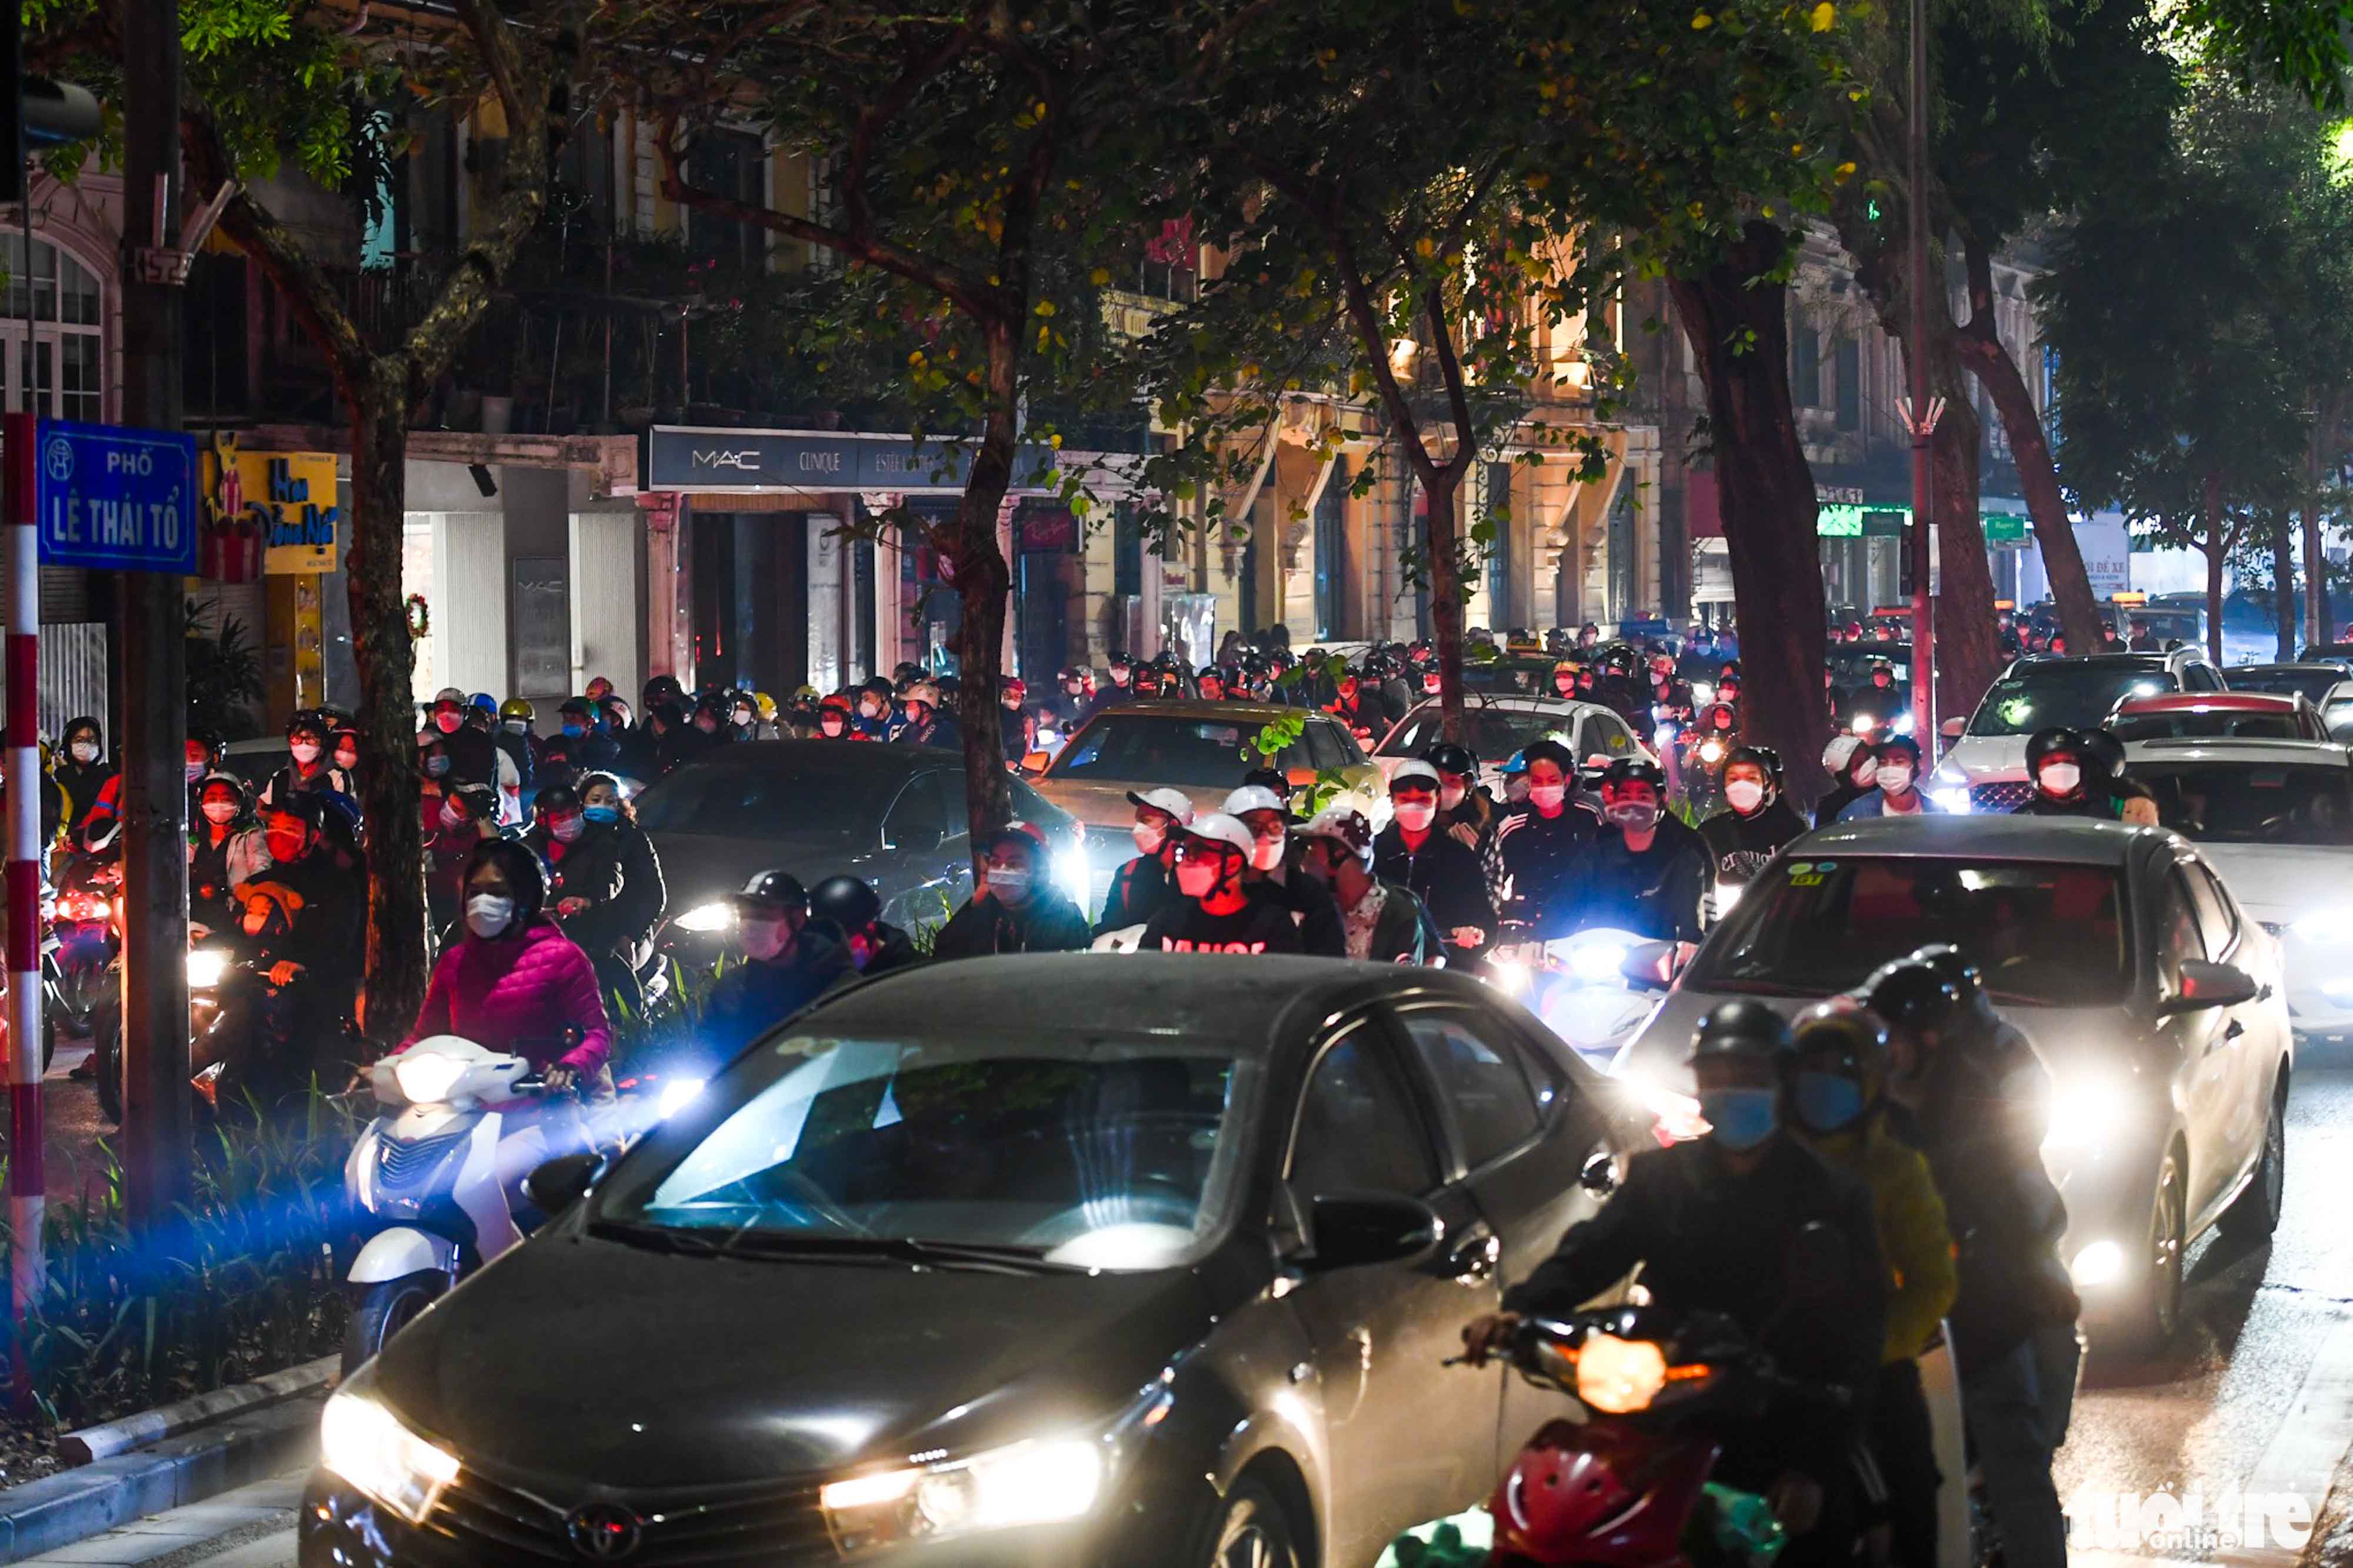 Vehicles crowd Le Thai To Street in Hanoi, December 24, 2021. Photo: Dat Quan / Tuoi Tre